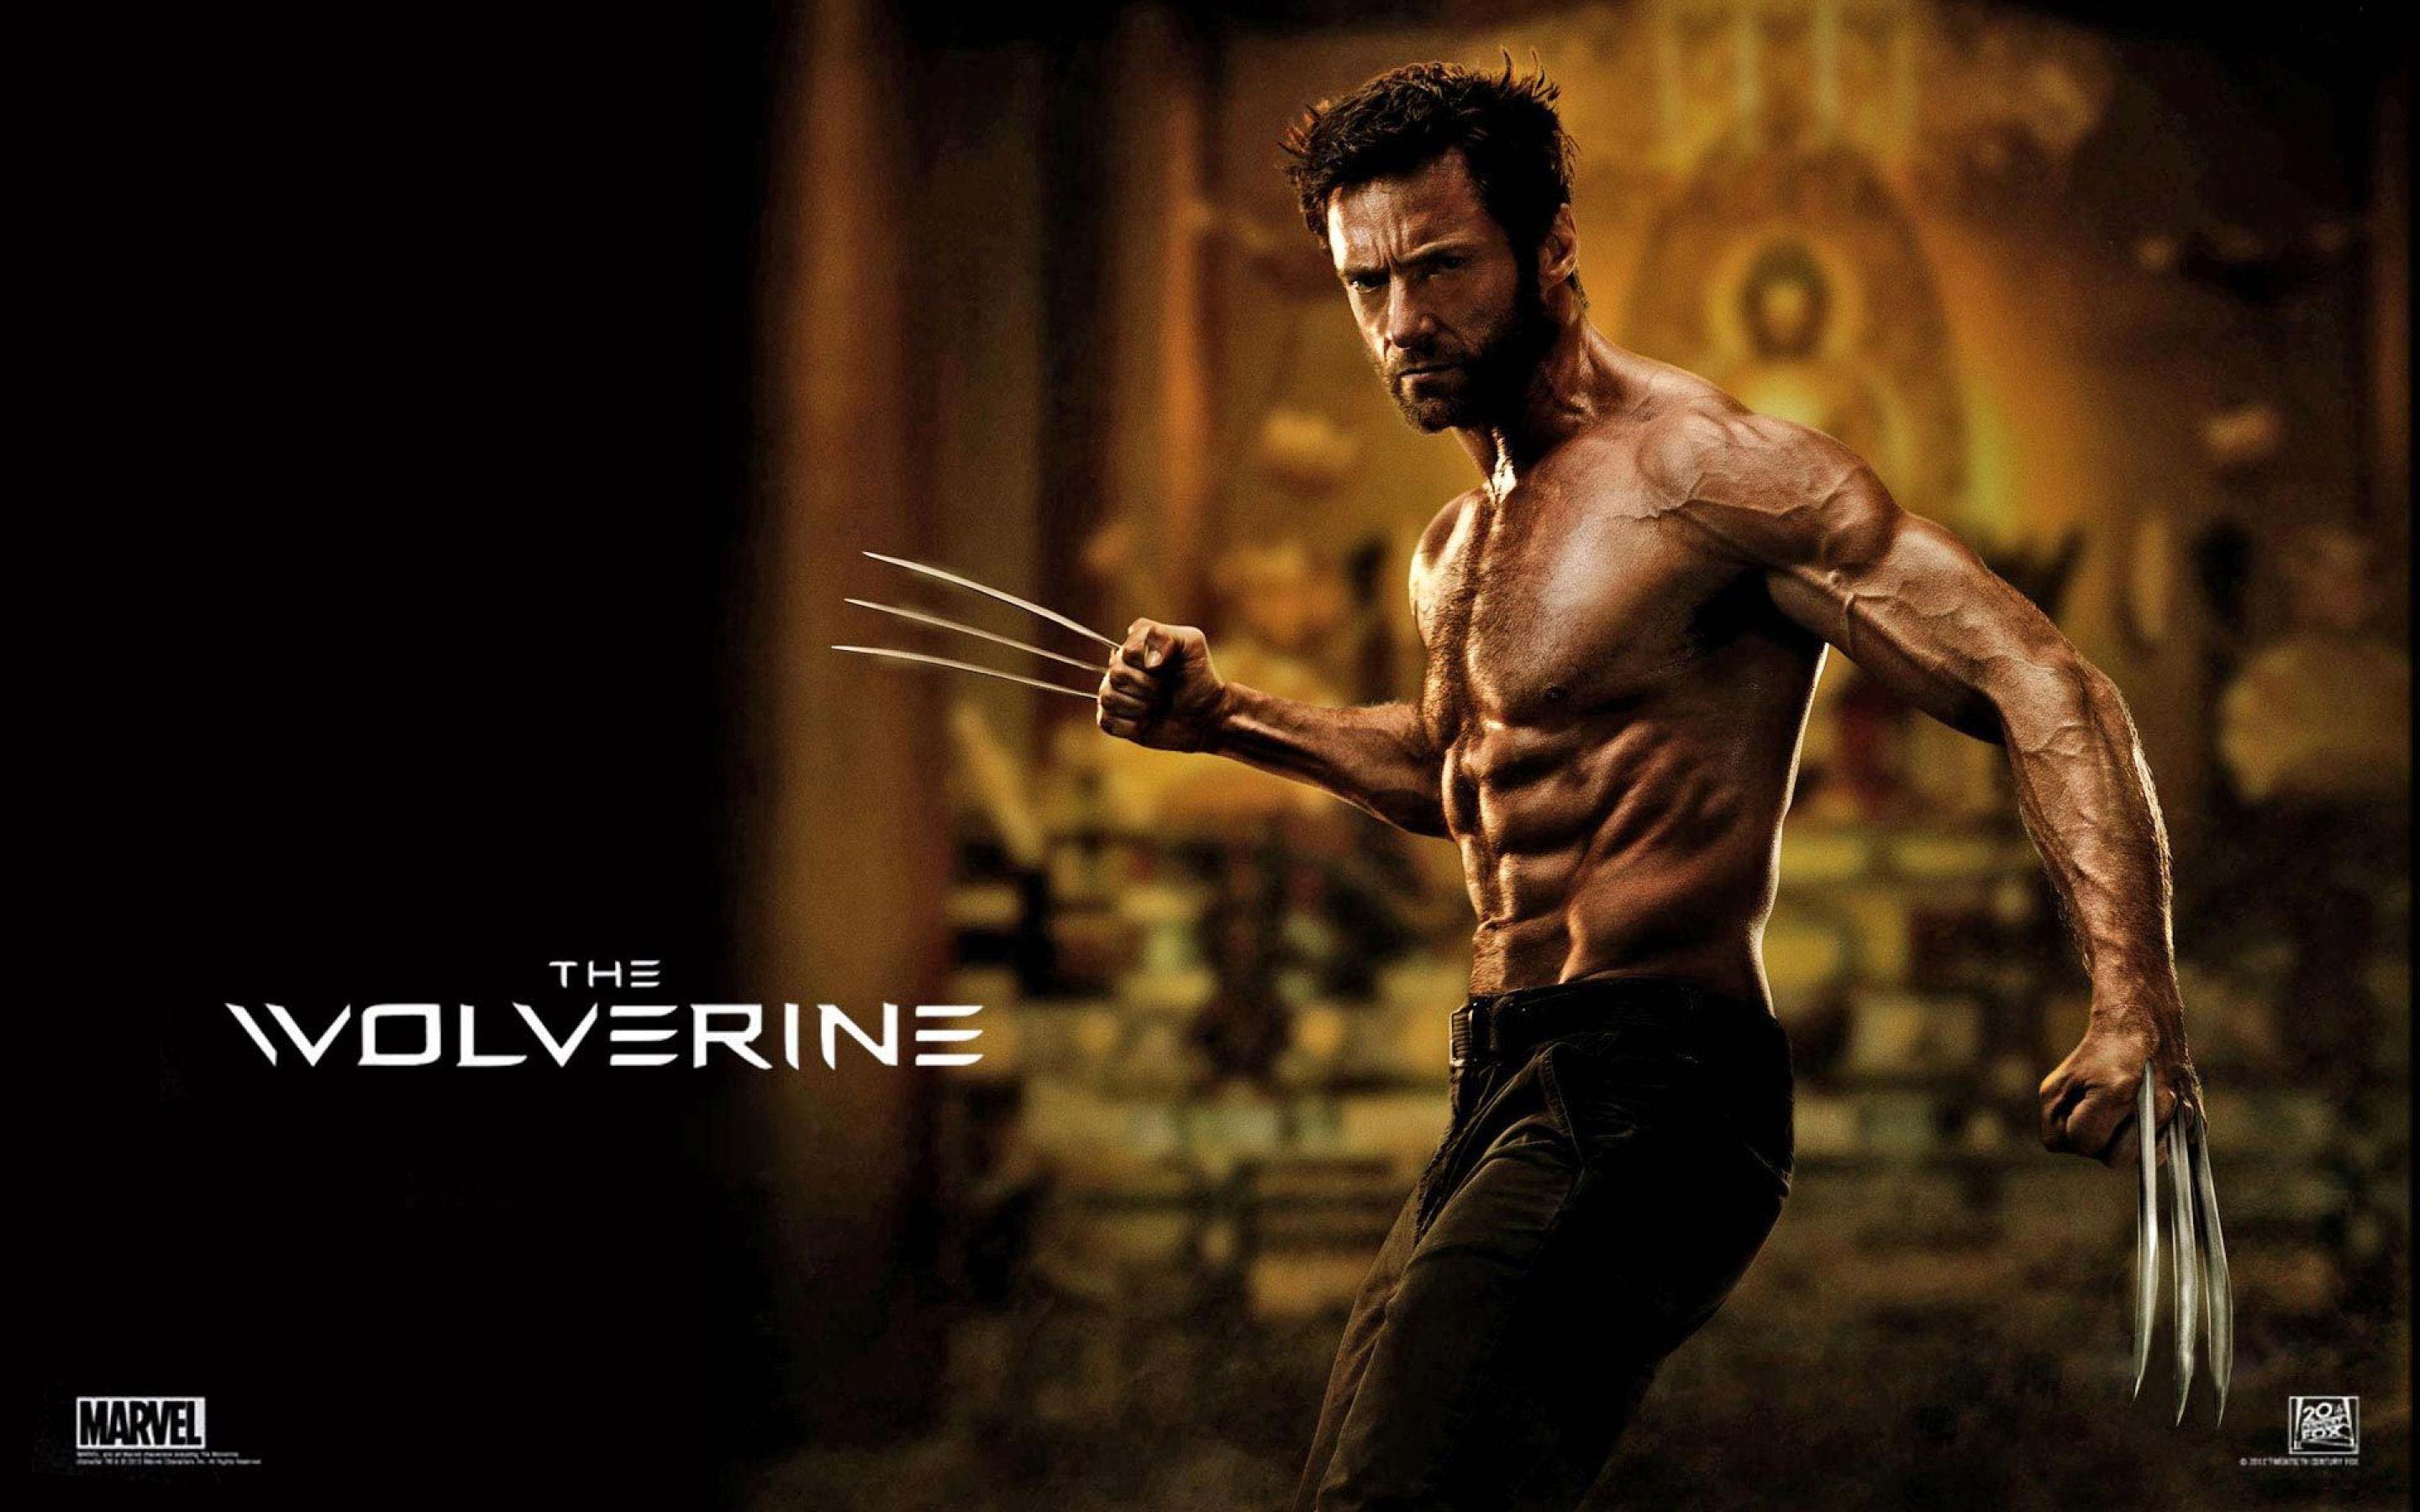 Movie XMen Origins Wolverine 2 HD Movies Wallpapers  HD Wallpapers  ID  34862